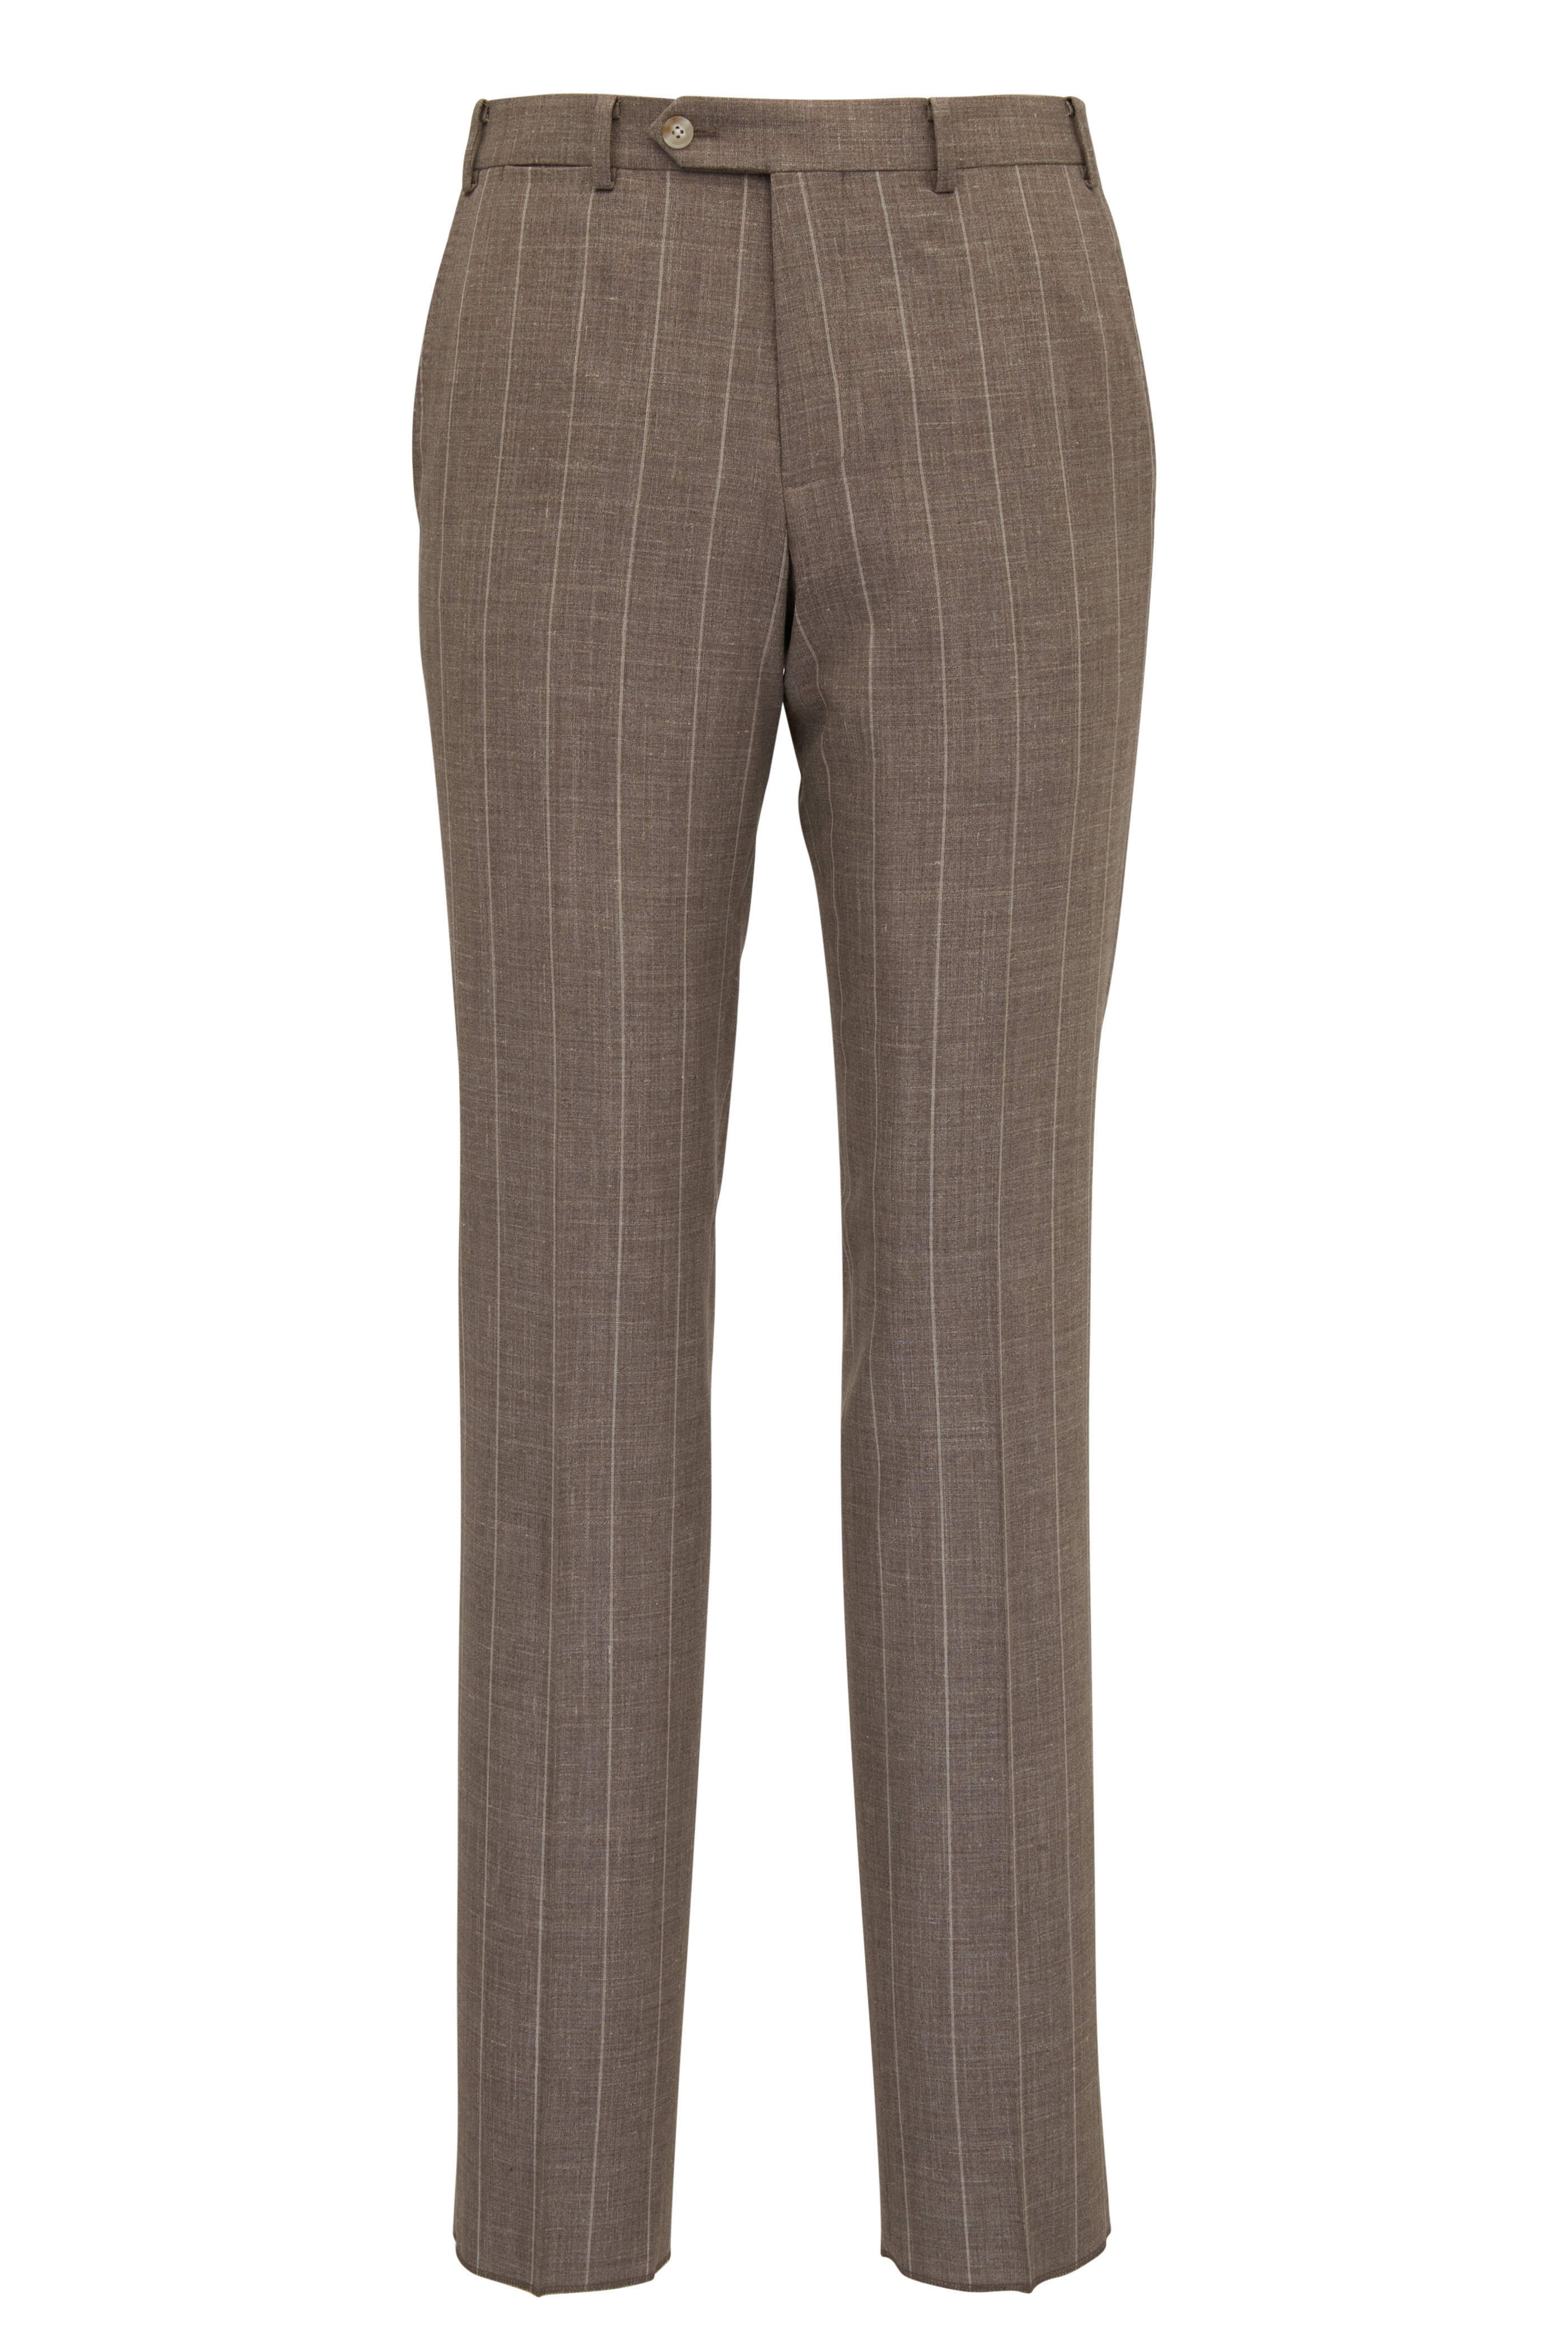 Atelier Munro - Sand Stripe Wool Blend Suit | Mitchell Stores